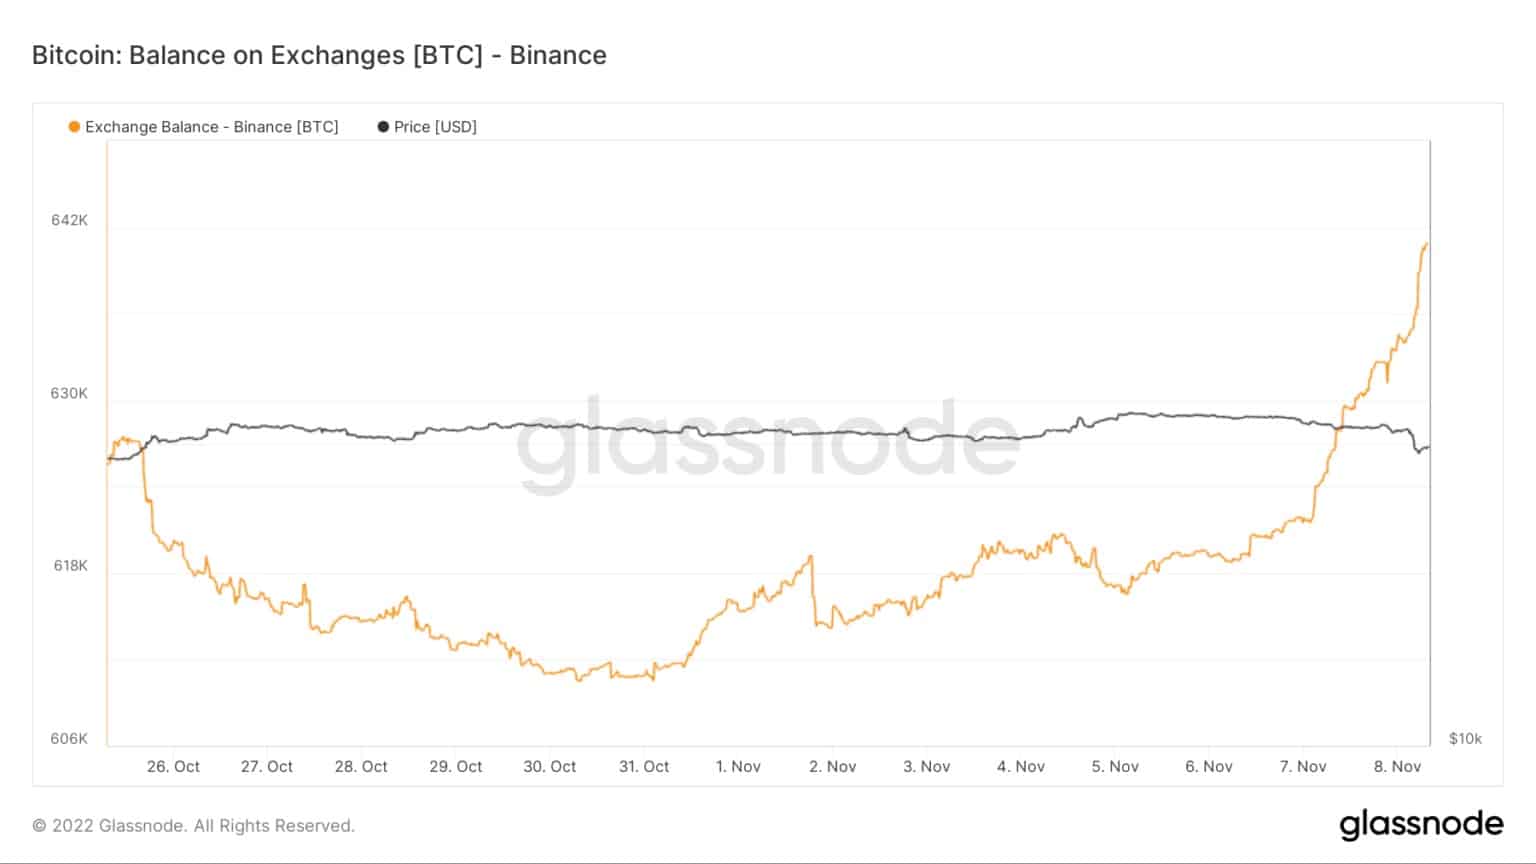 Binance Bitcoin balance from October to November 2022